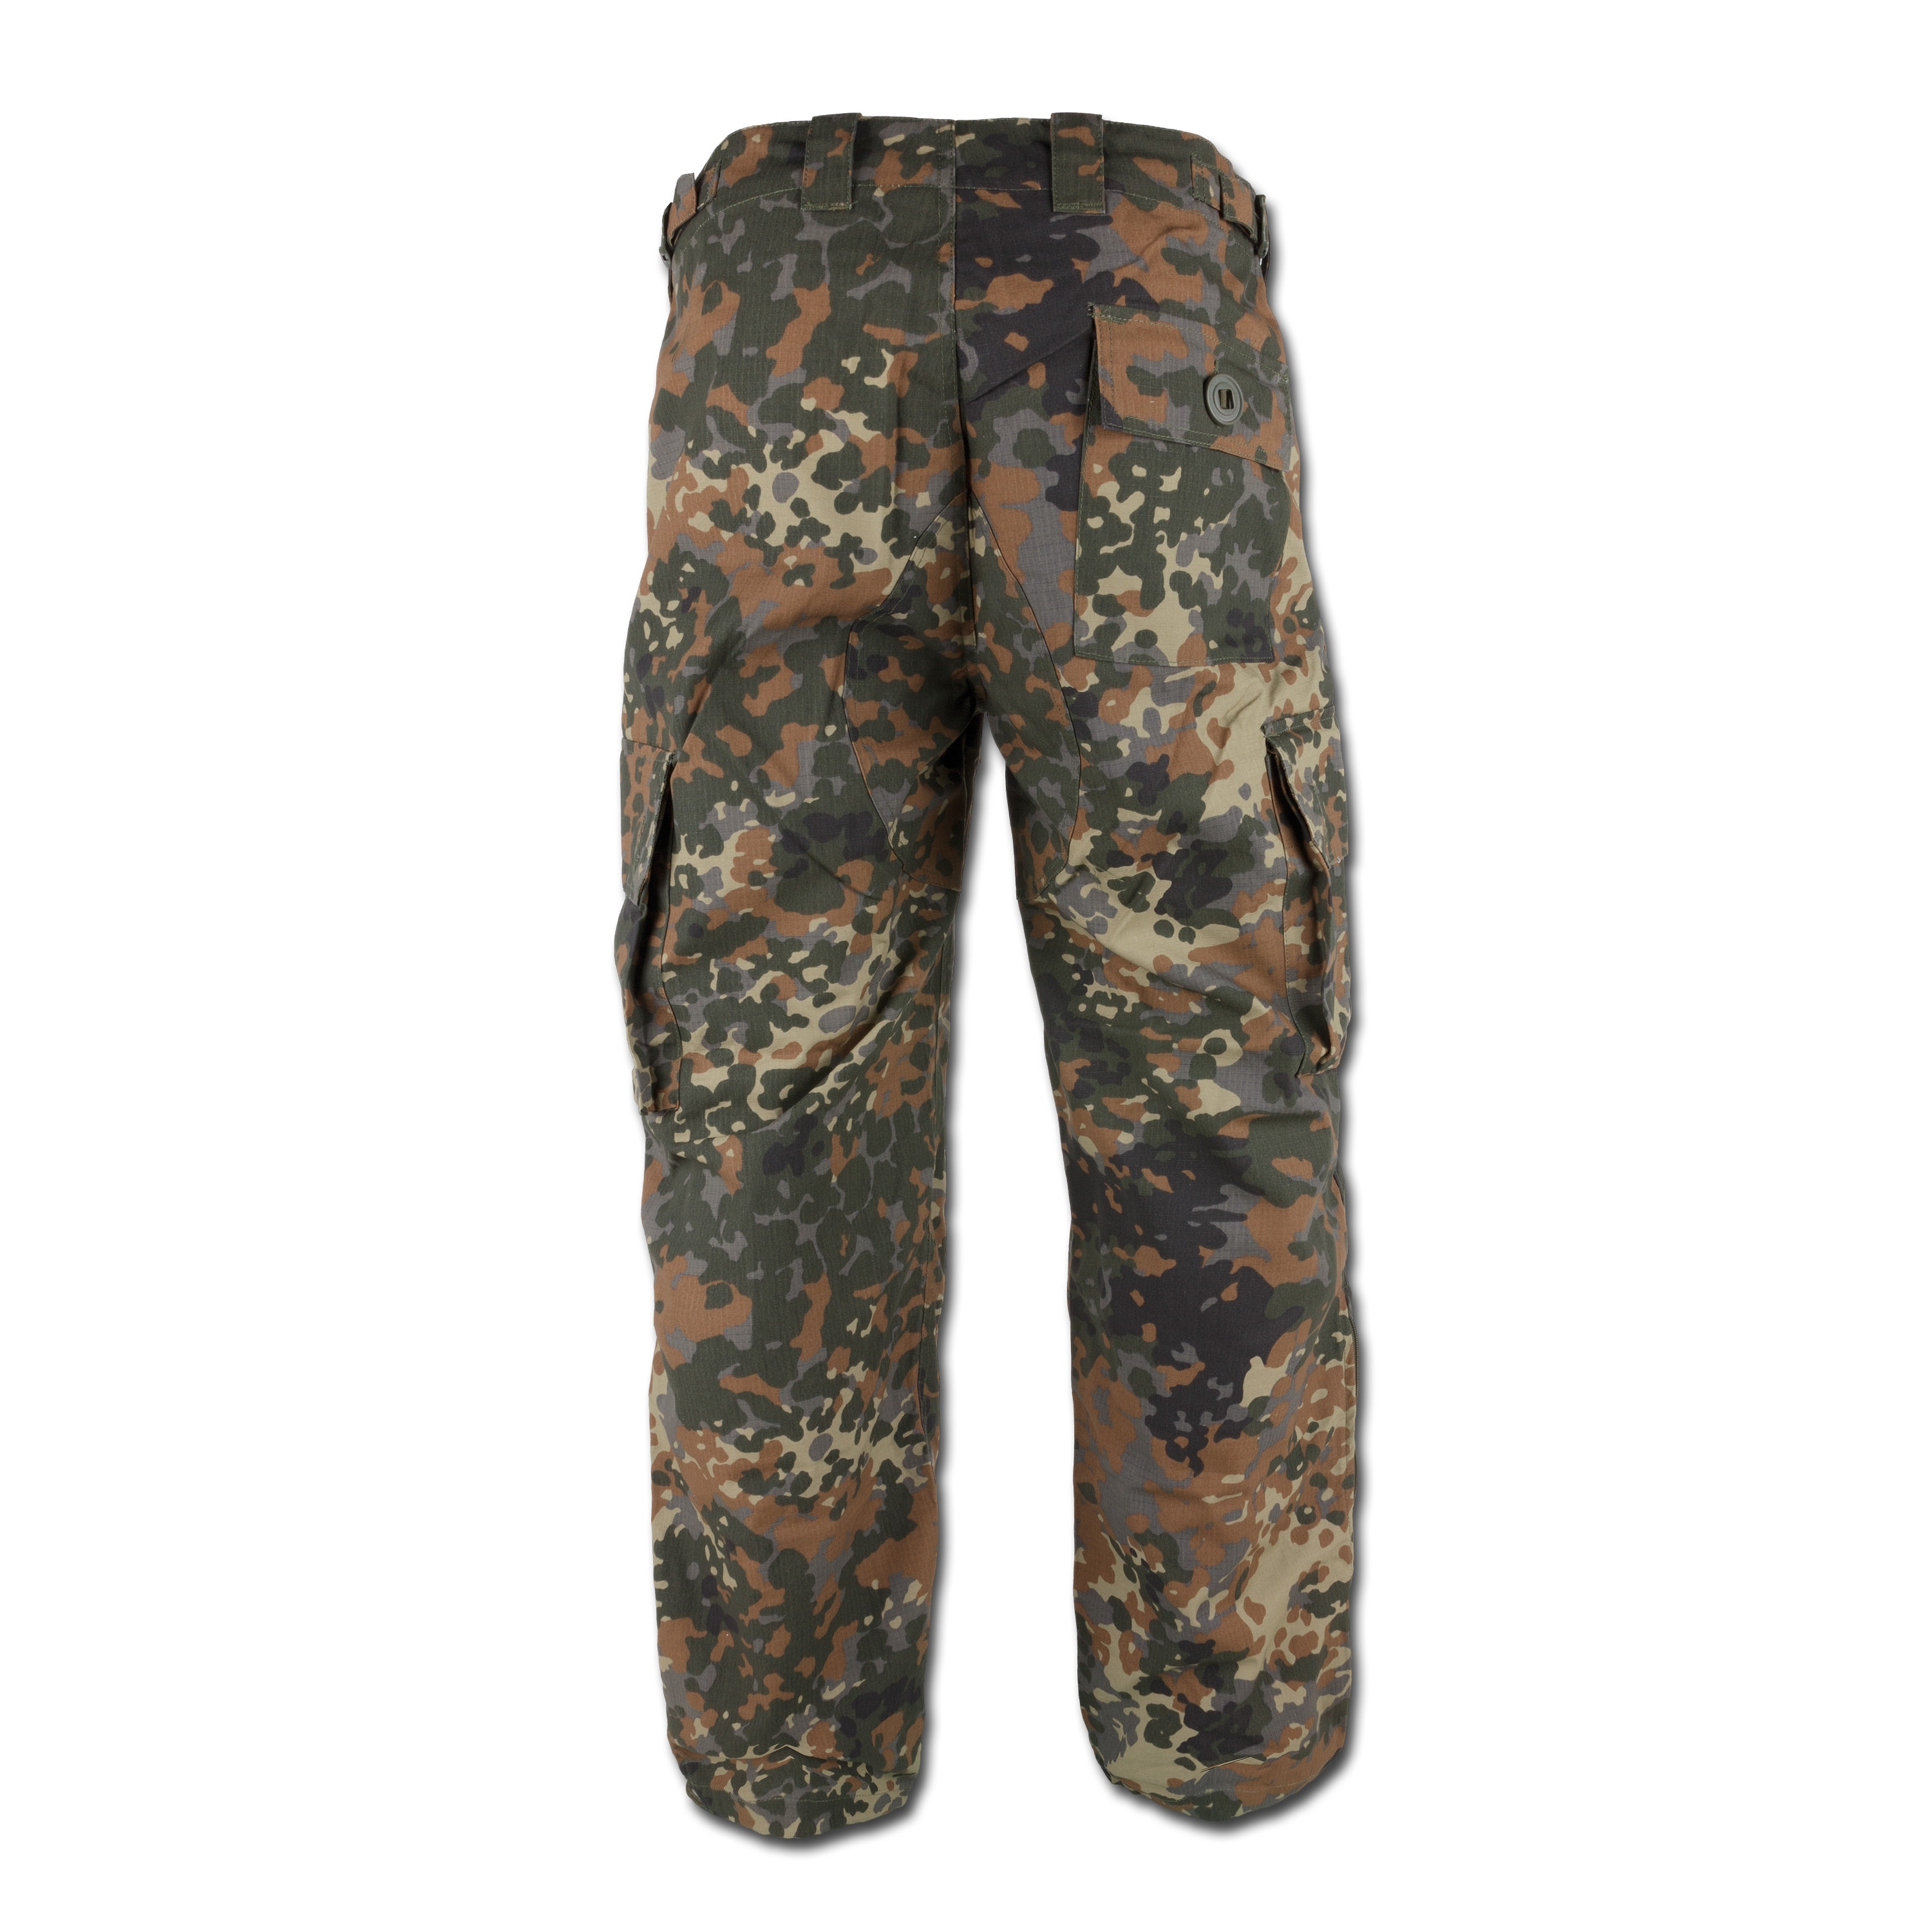 MIL-TEC camouflage cargo trousers pants size L